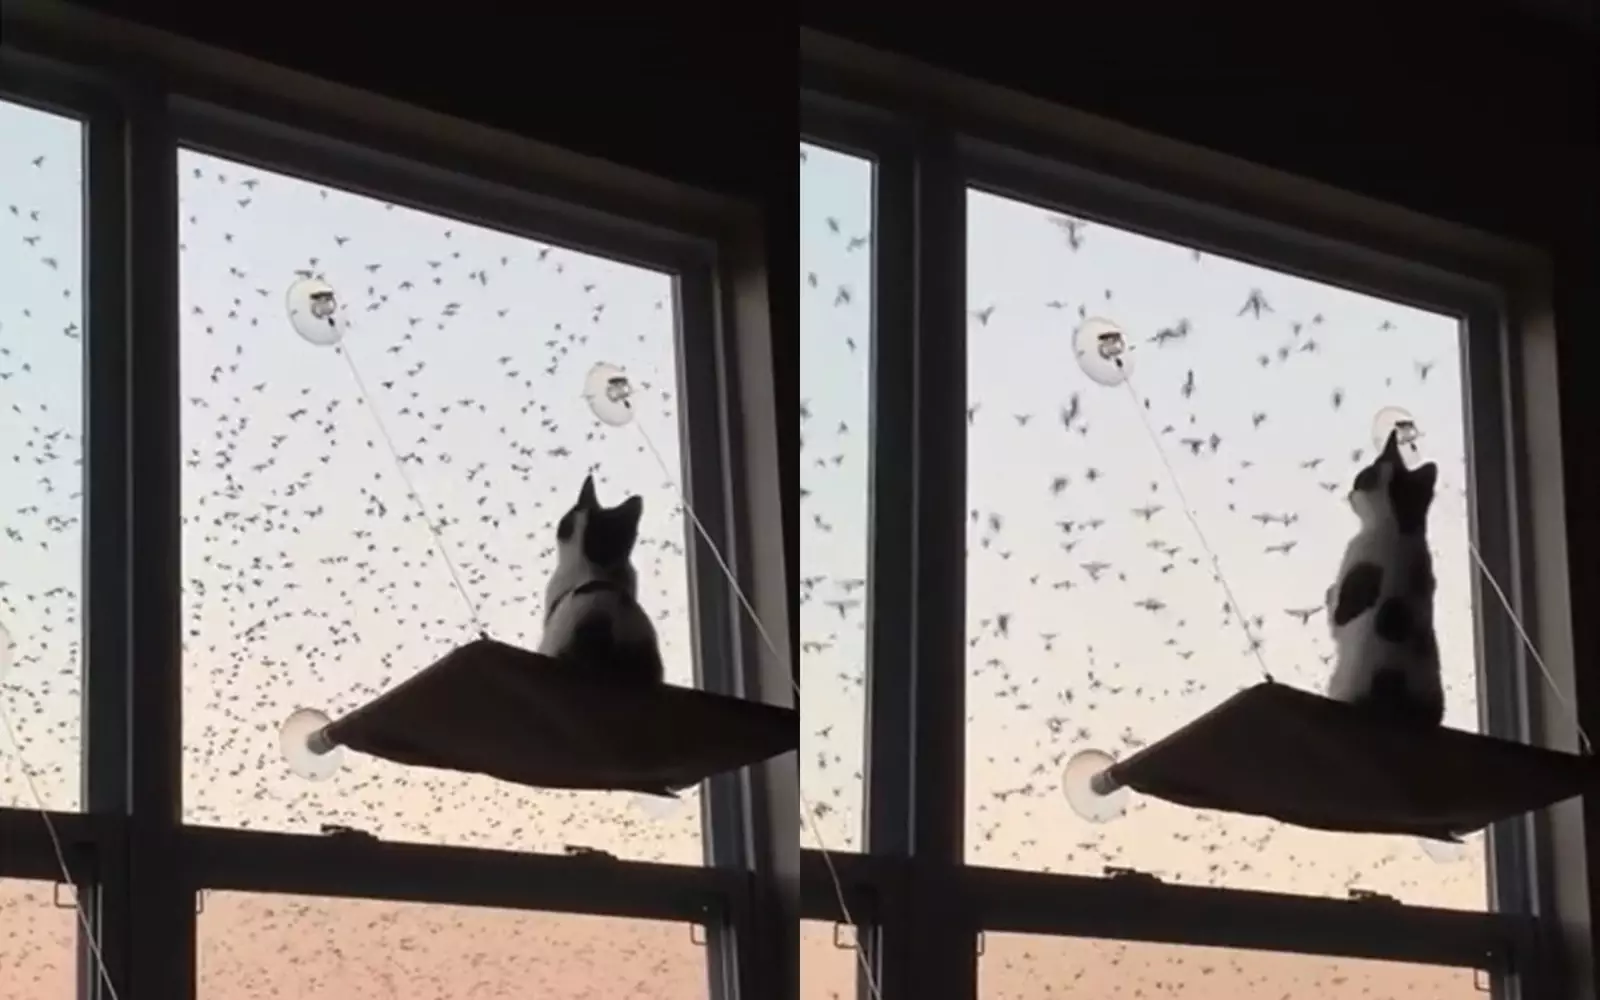 Птички для котика видео. Кот и птицы за окном. Кот и птичка на окне. Кот в окне птица. Кот у окна и стаи птиц.